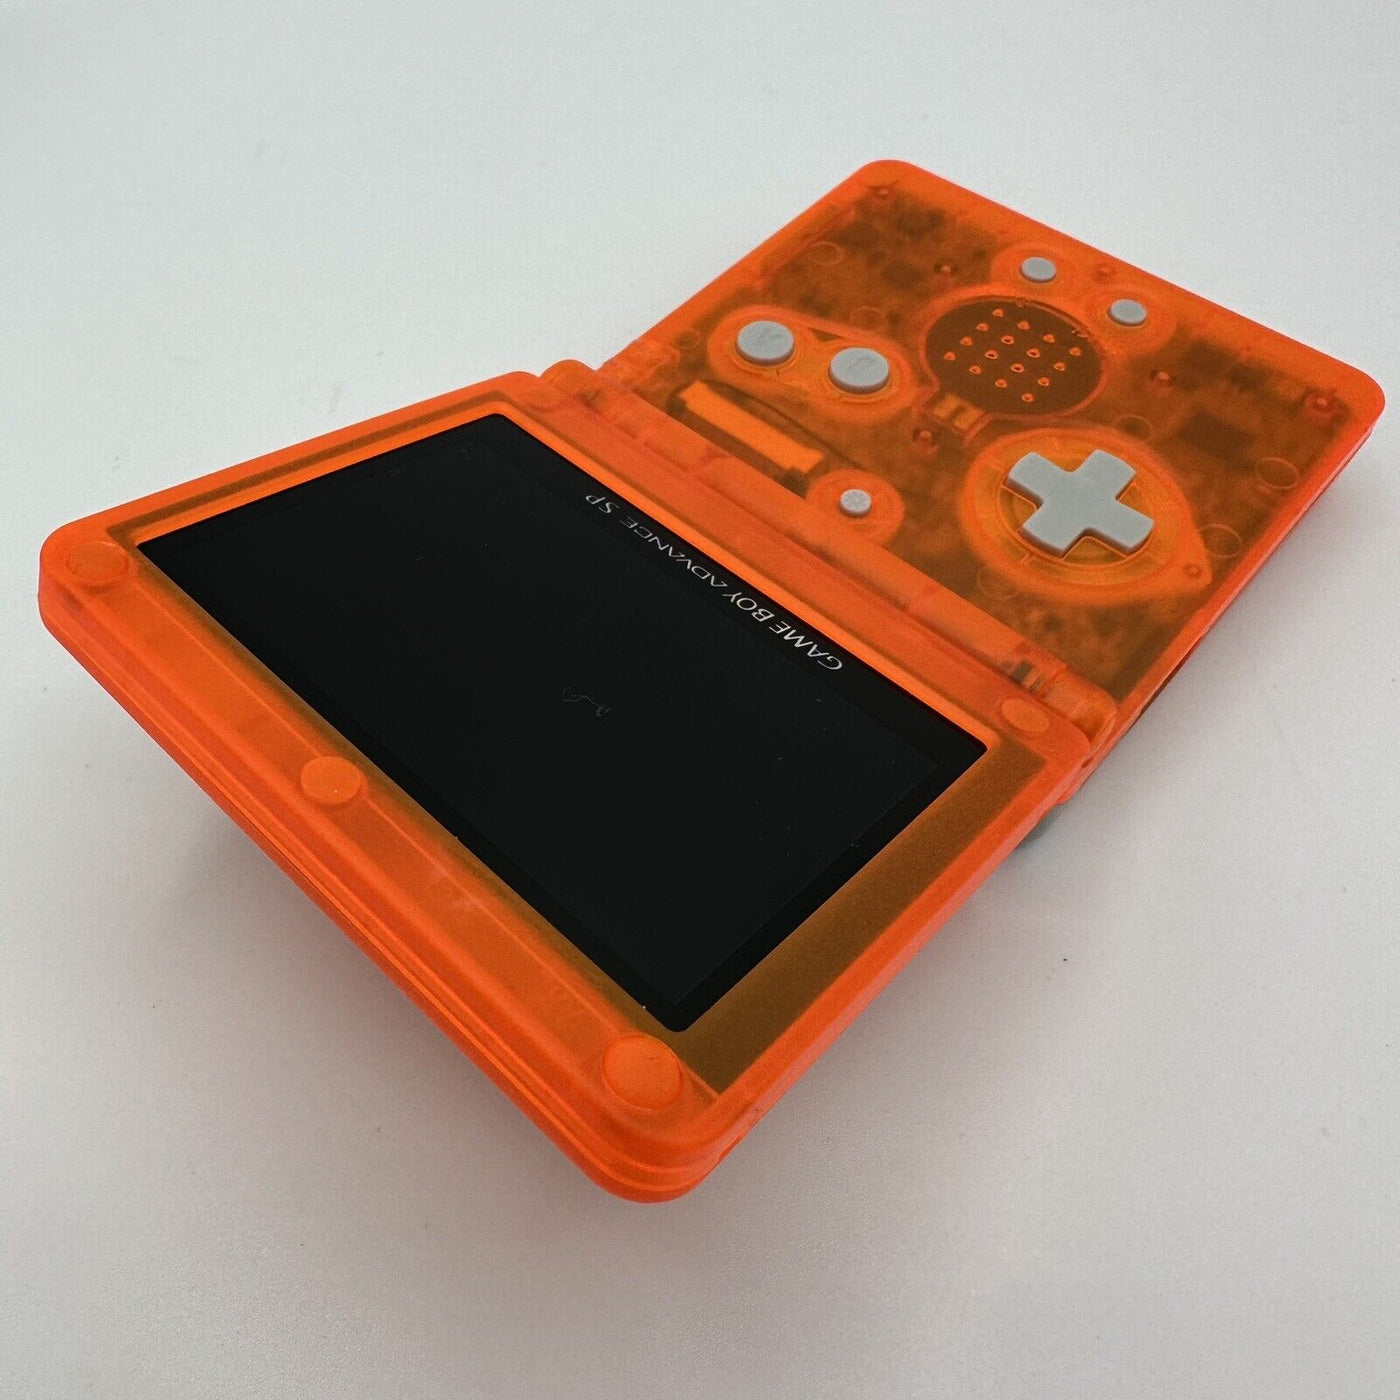 Game Boy Advance SP Console - Neon Orange